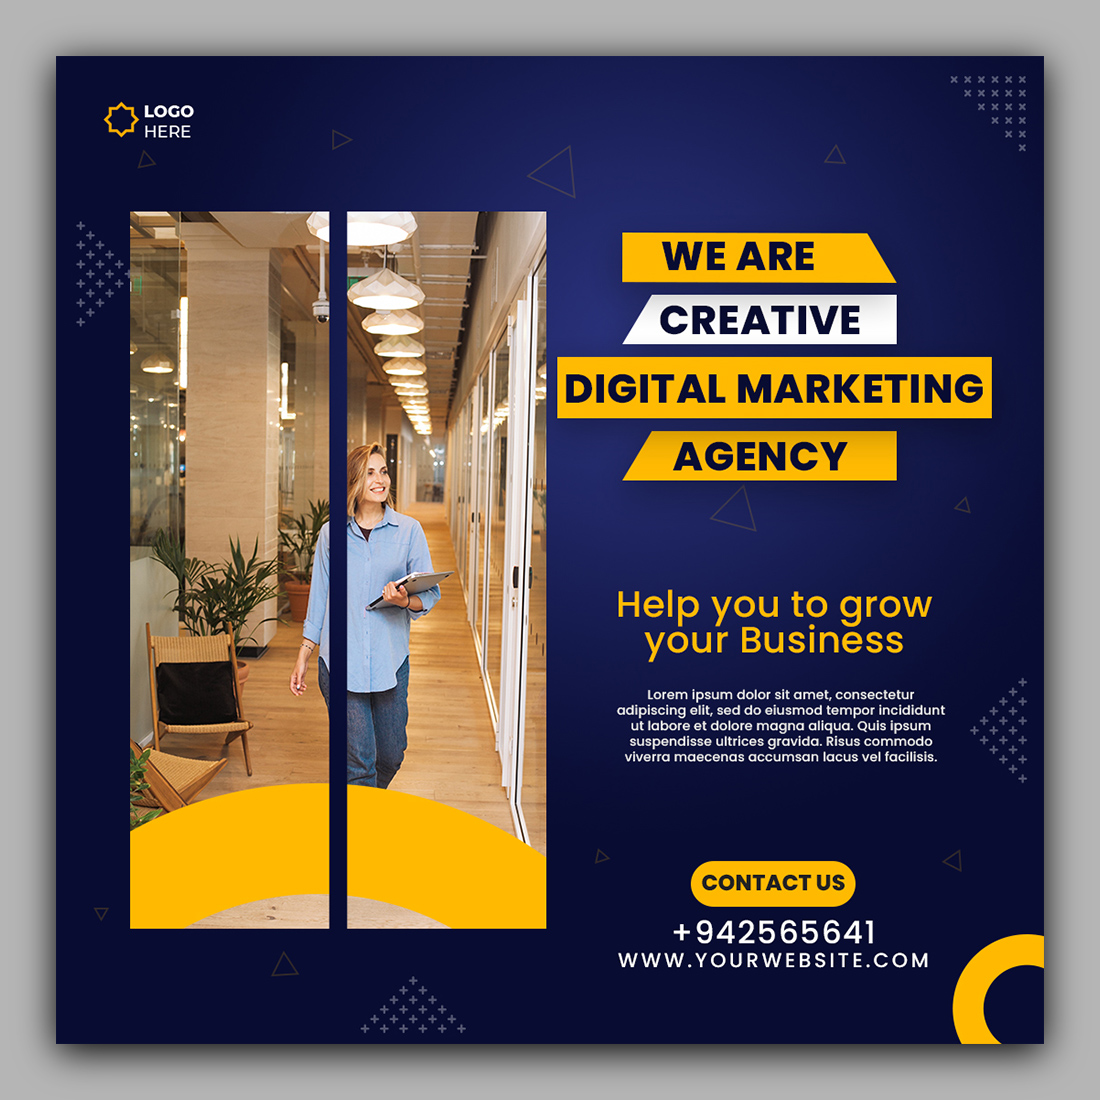 Digital Marketing Post For Social Media created by ridamalik.